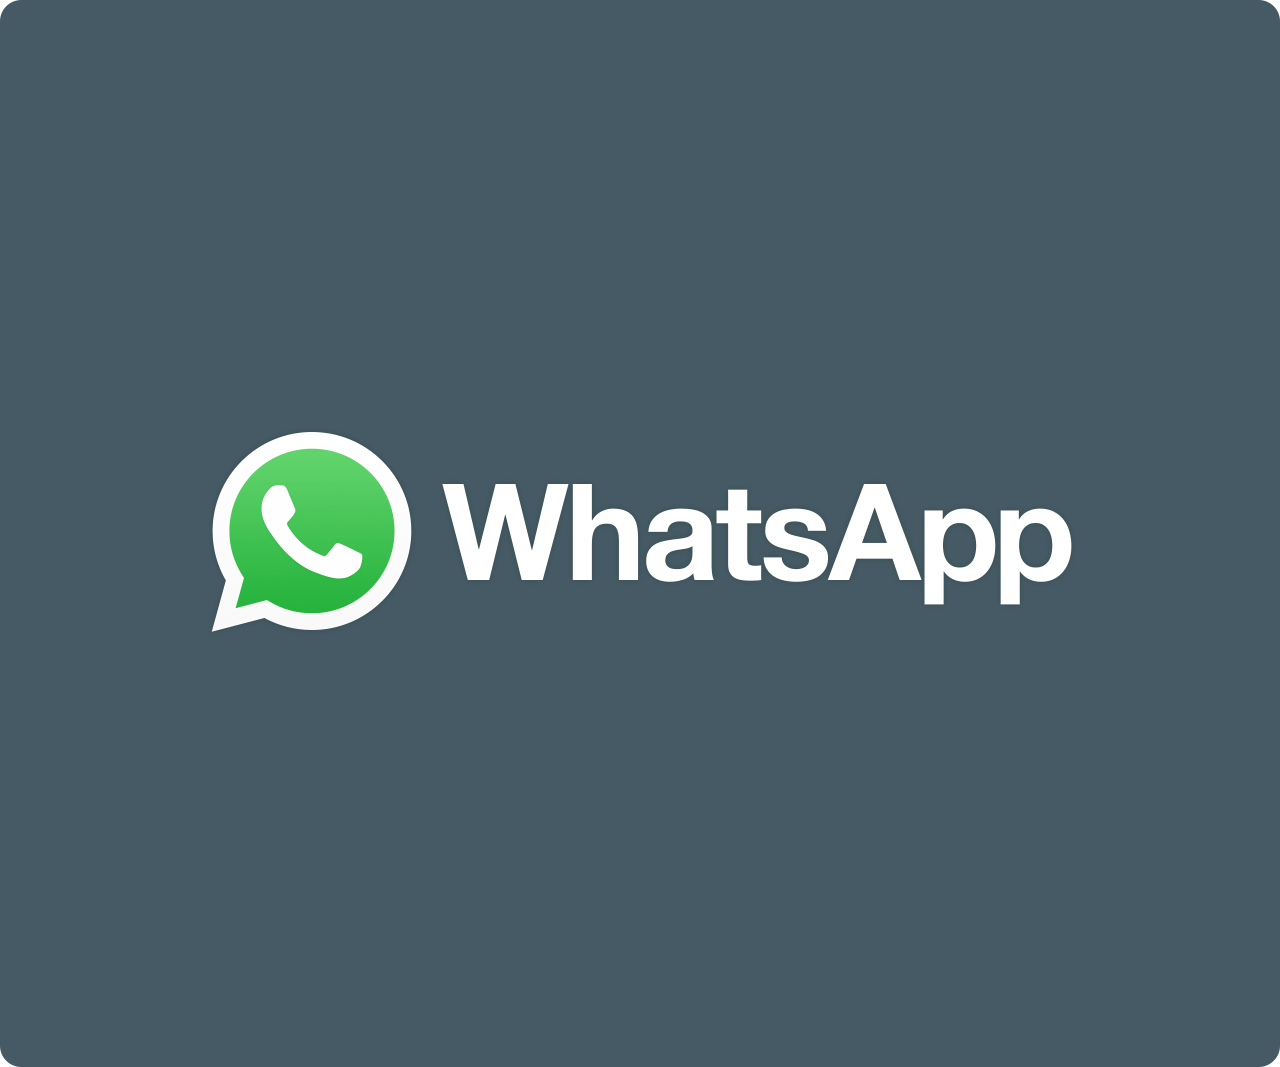 WhatsApp icon and wordmark